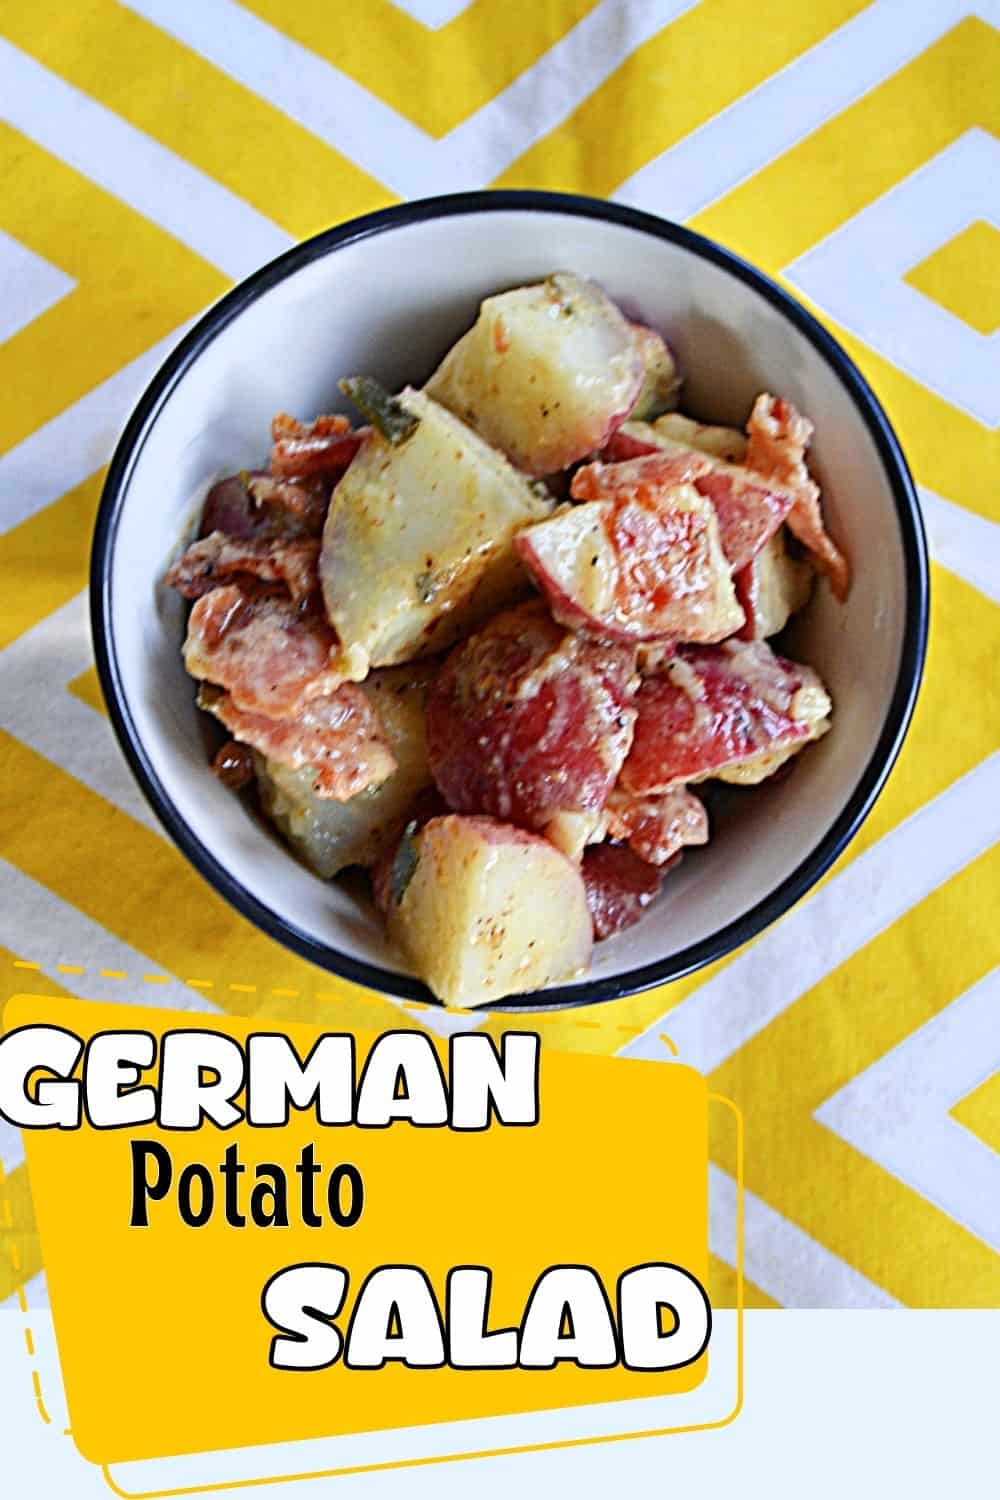 Pin Image:  A bowl of German Potato Salad, text title.